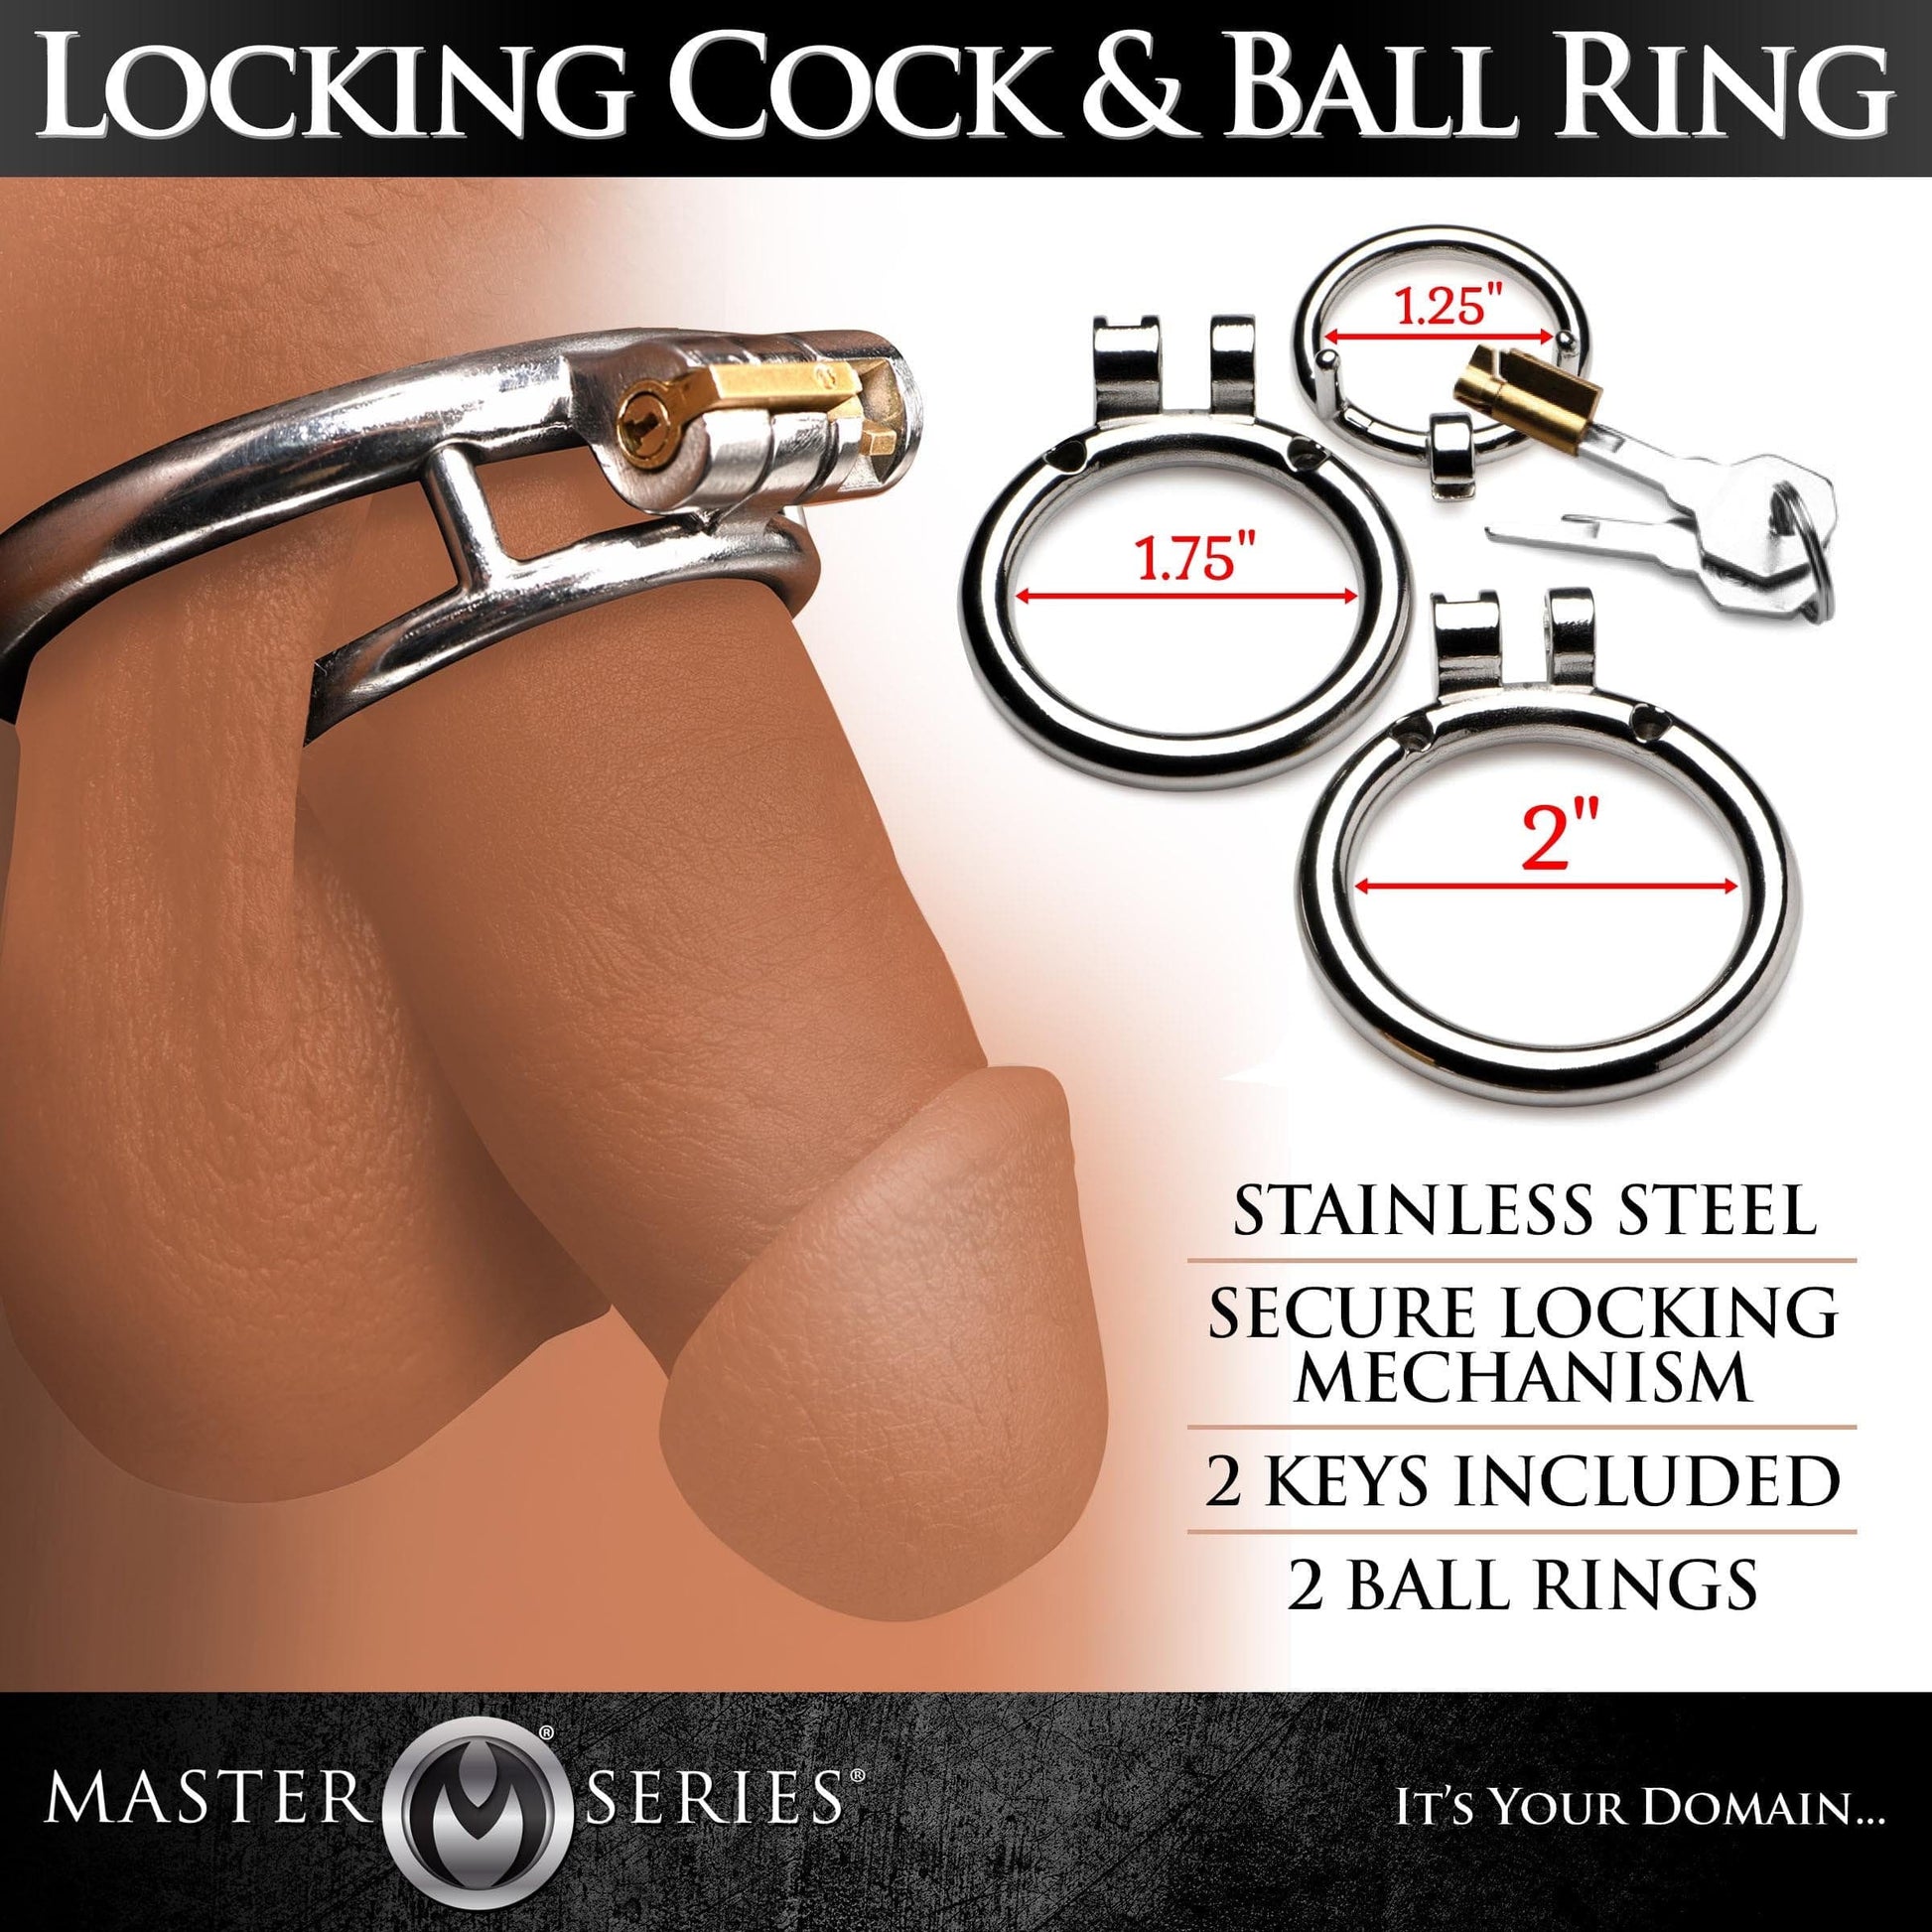 Master Series Cock Ring Locking Cock And Ball Ring at the Haus of Shag